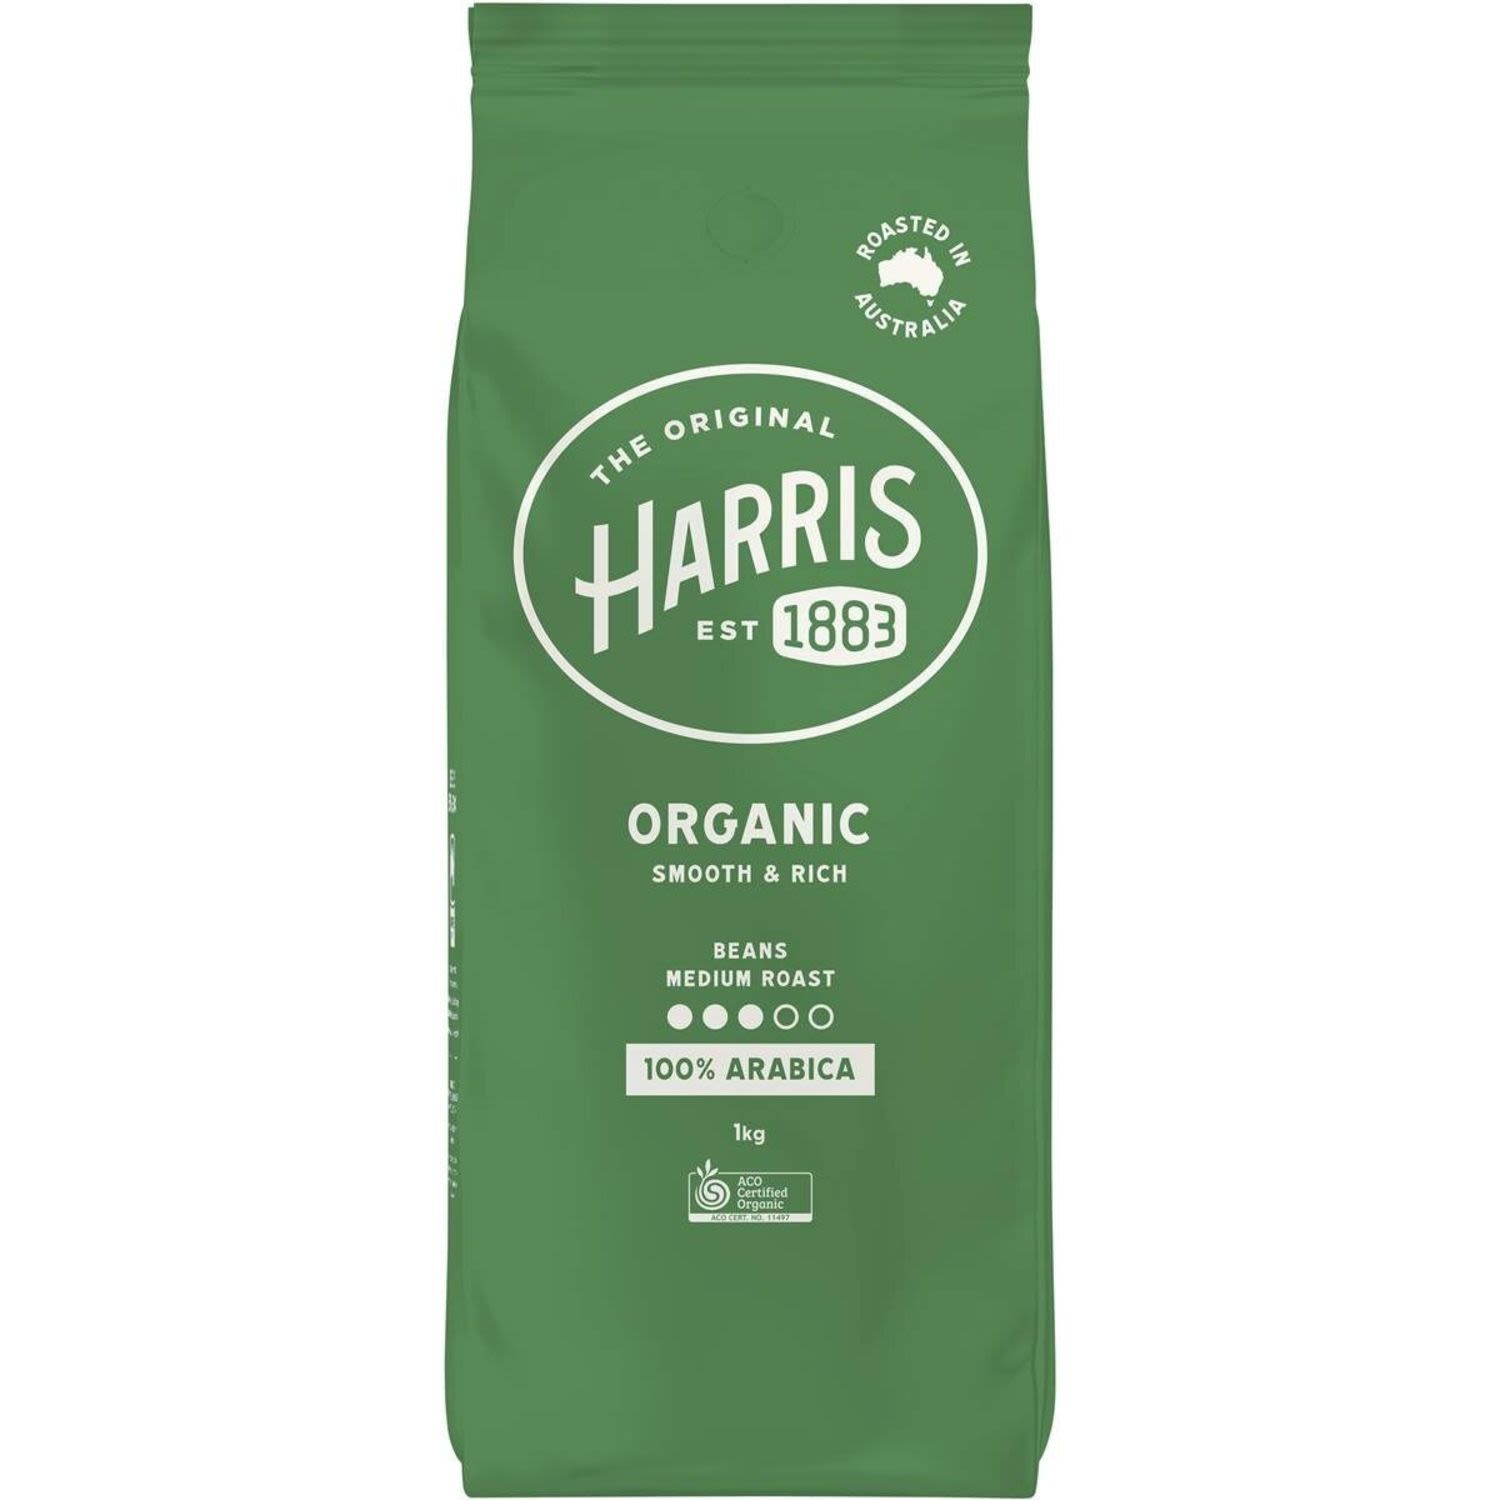 Harris Coffee Beans Organic, 1 Kilogram